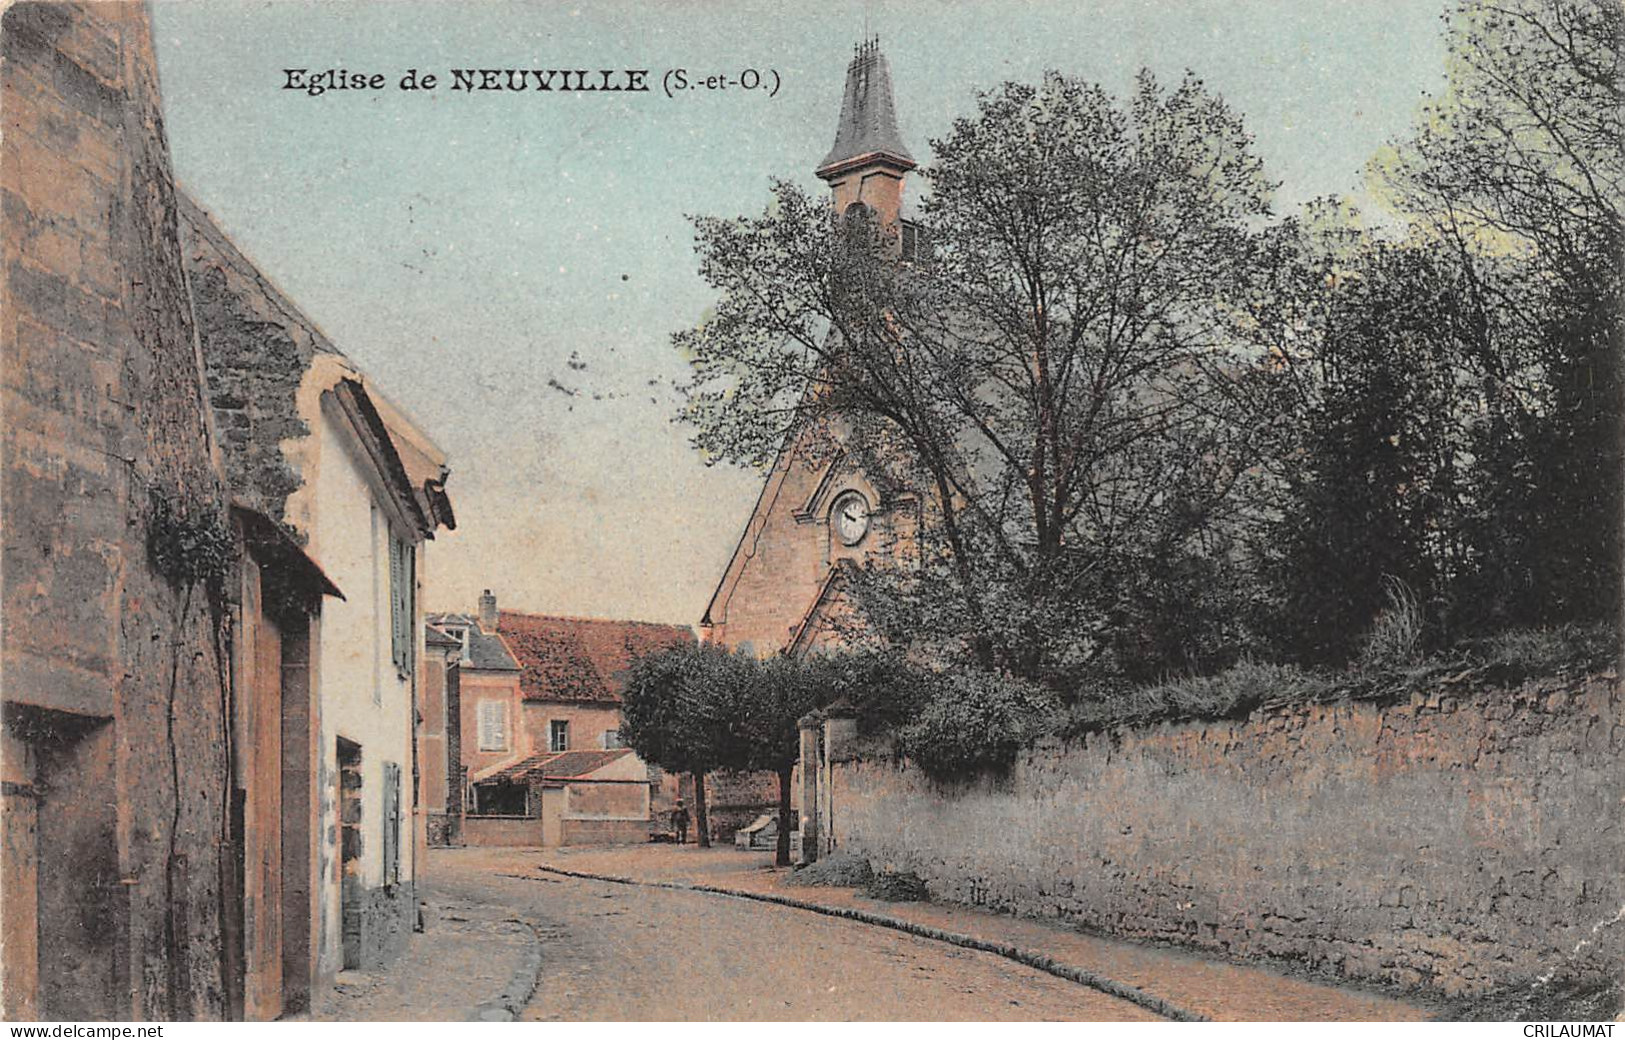 95-NEUVILLE-Eglise-N 6003-A/0189 - Neuville-sur-Oise